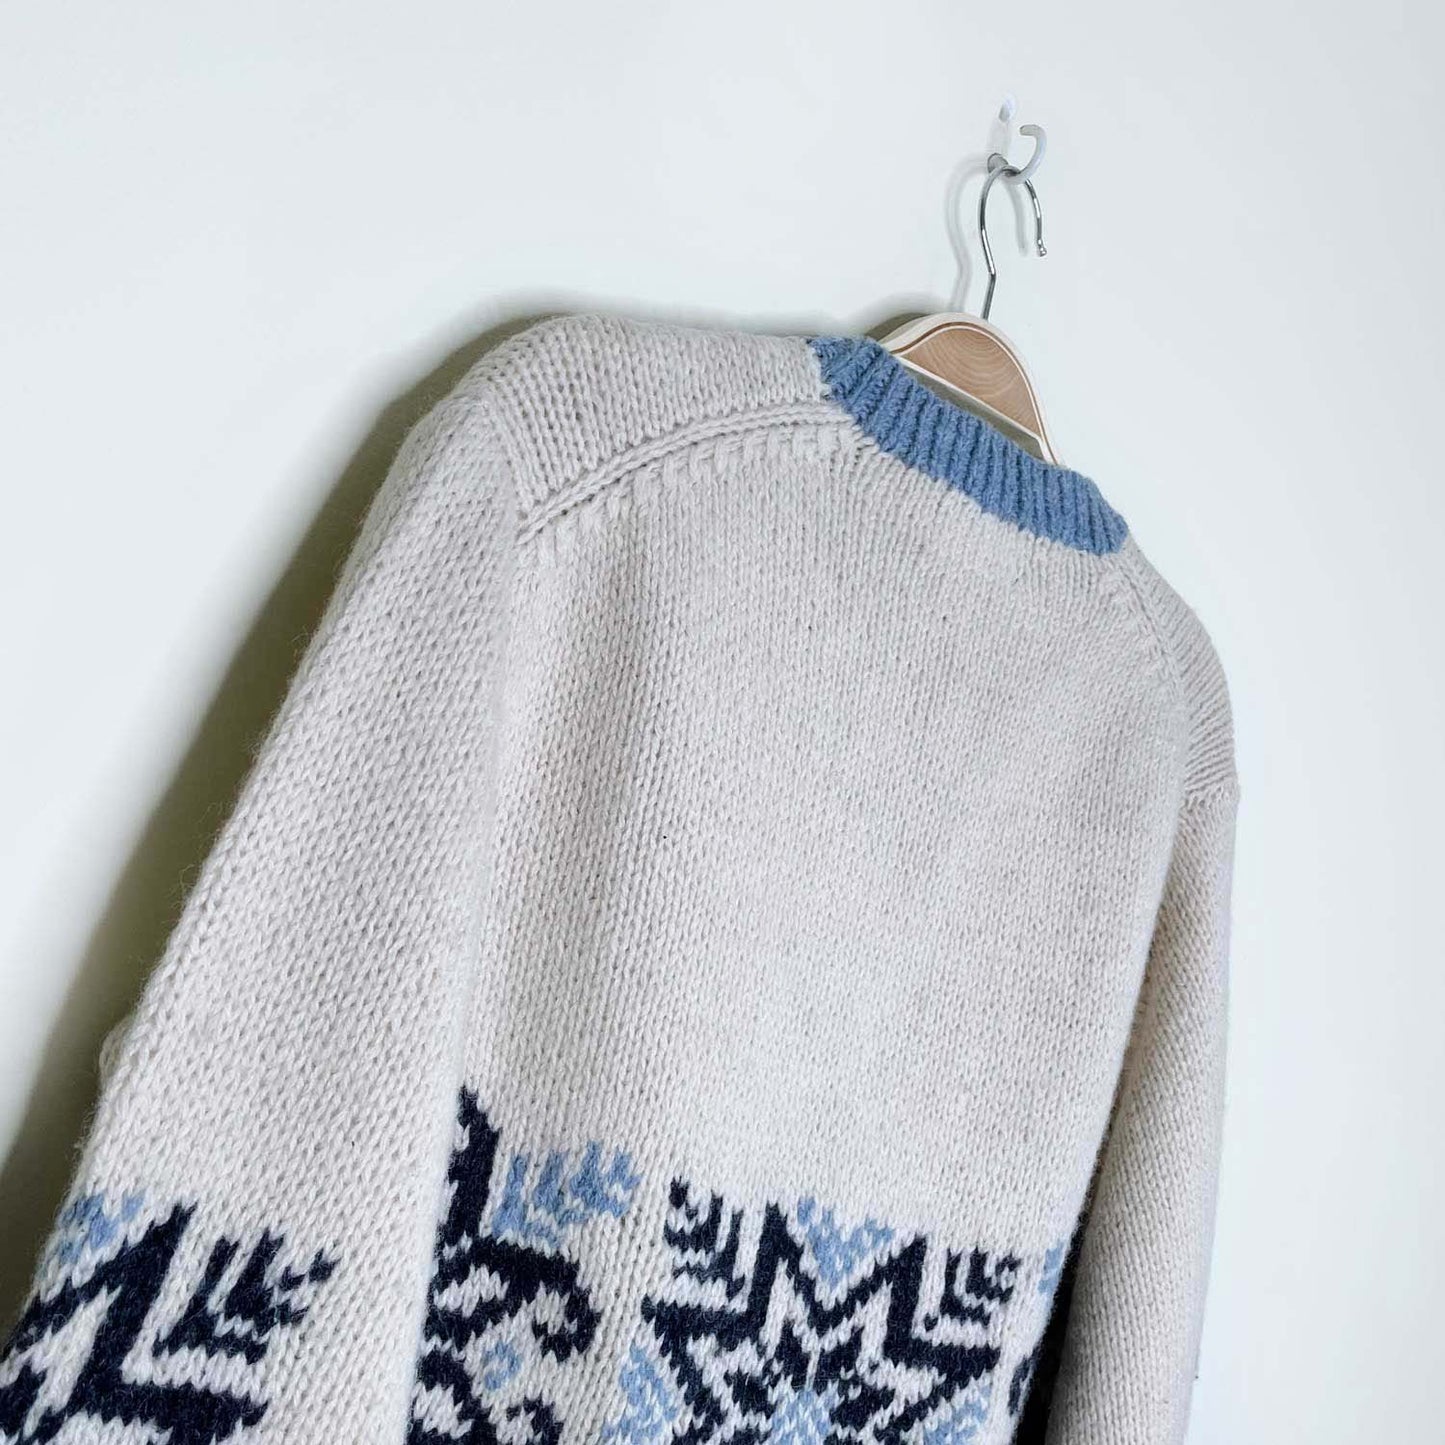 vintage squaw valley nordic snowflake knit cardigan - size medium